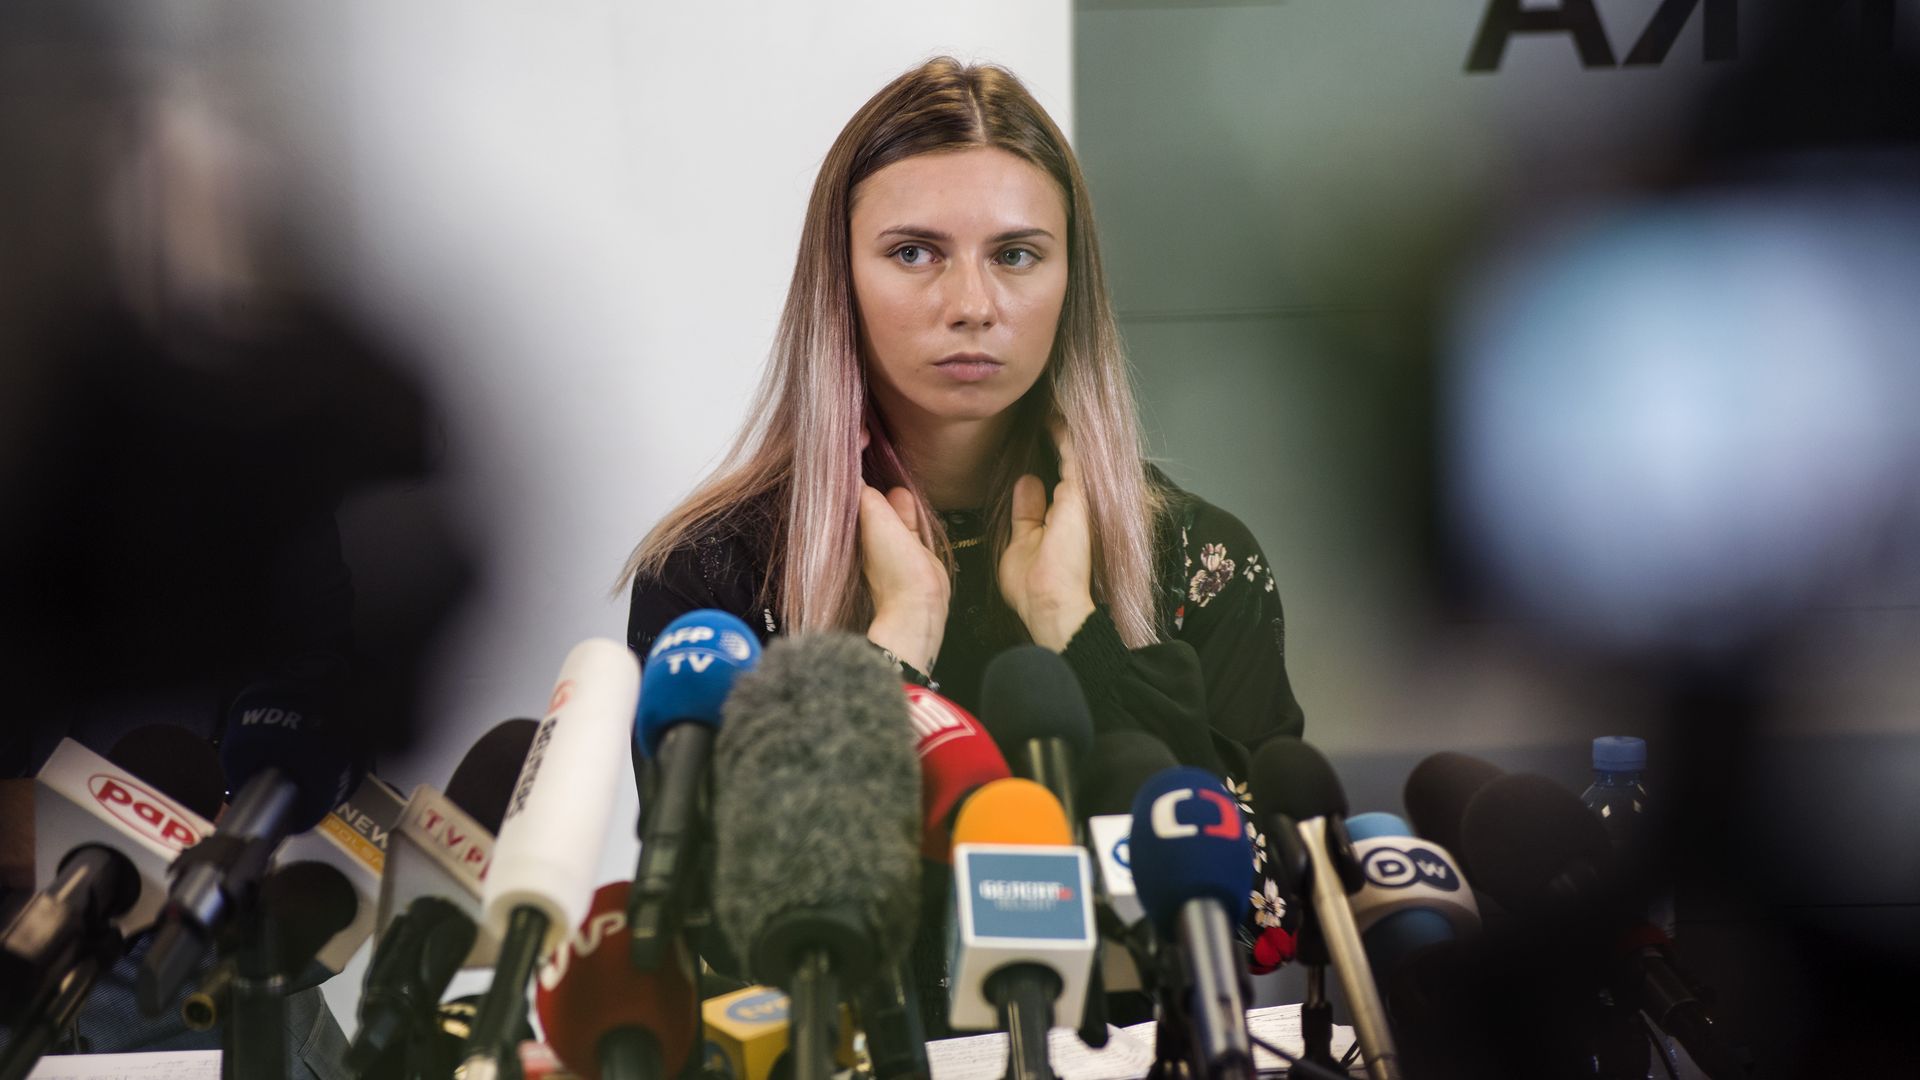 Krystsina during a press conference.